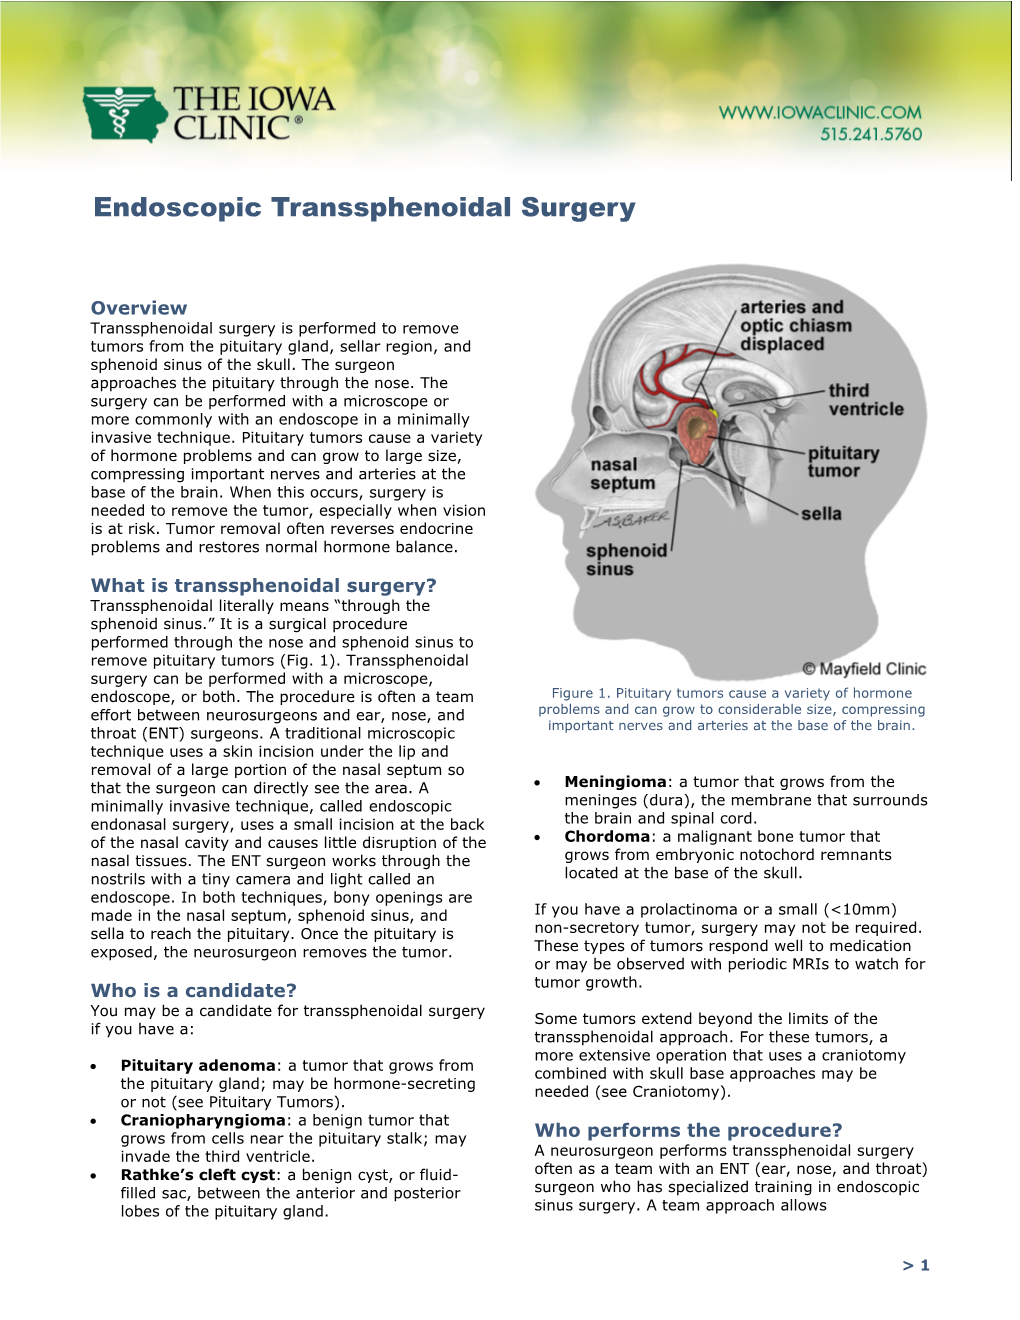 Endoscopic Transsphenoidal Surgery